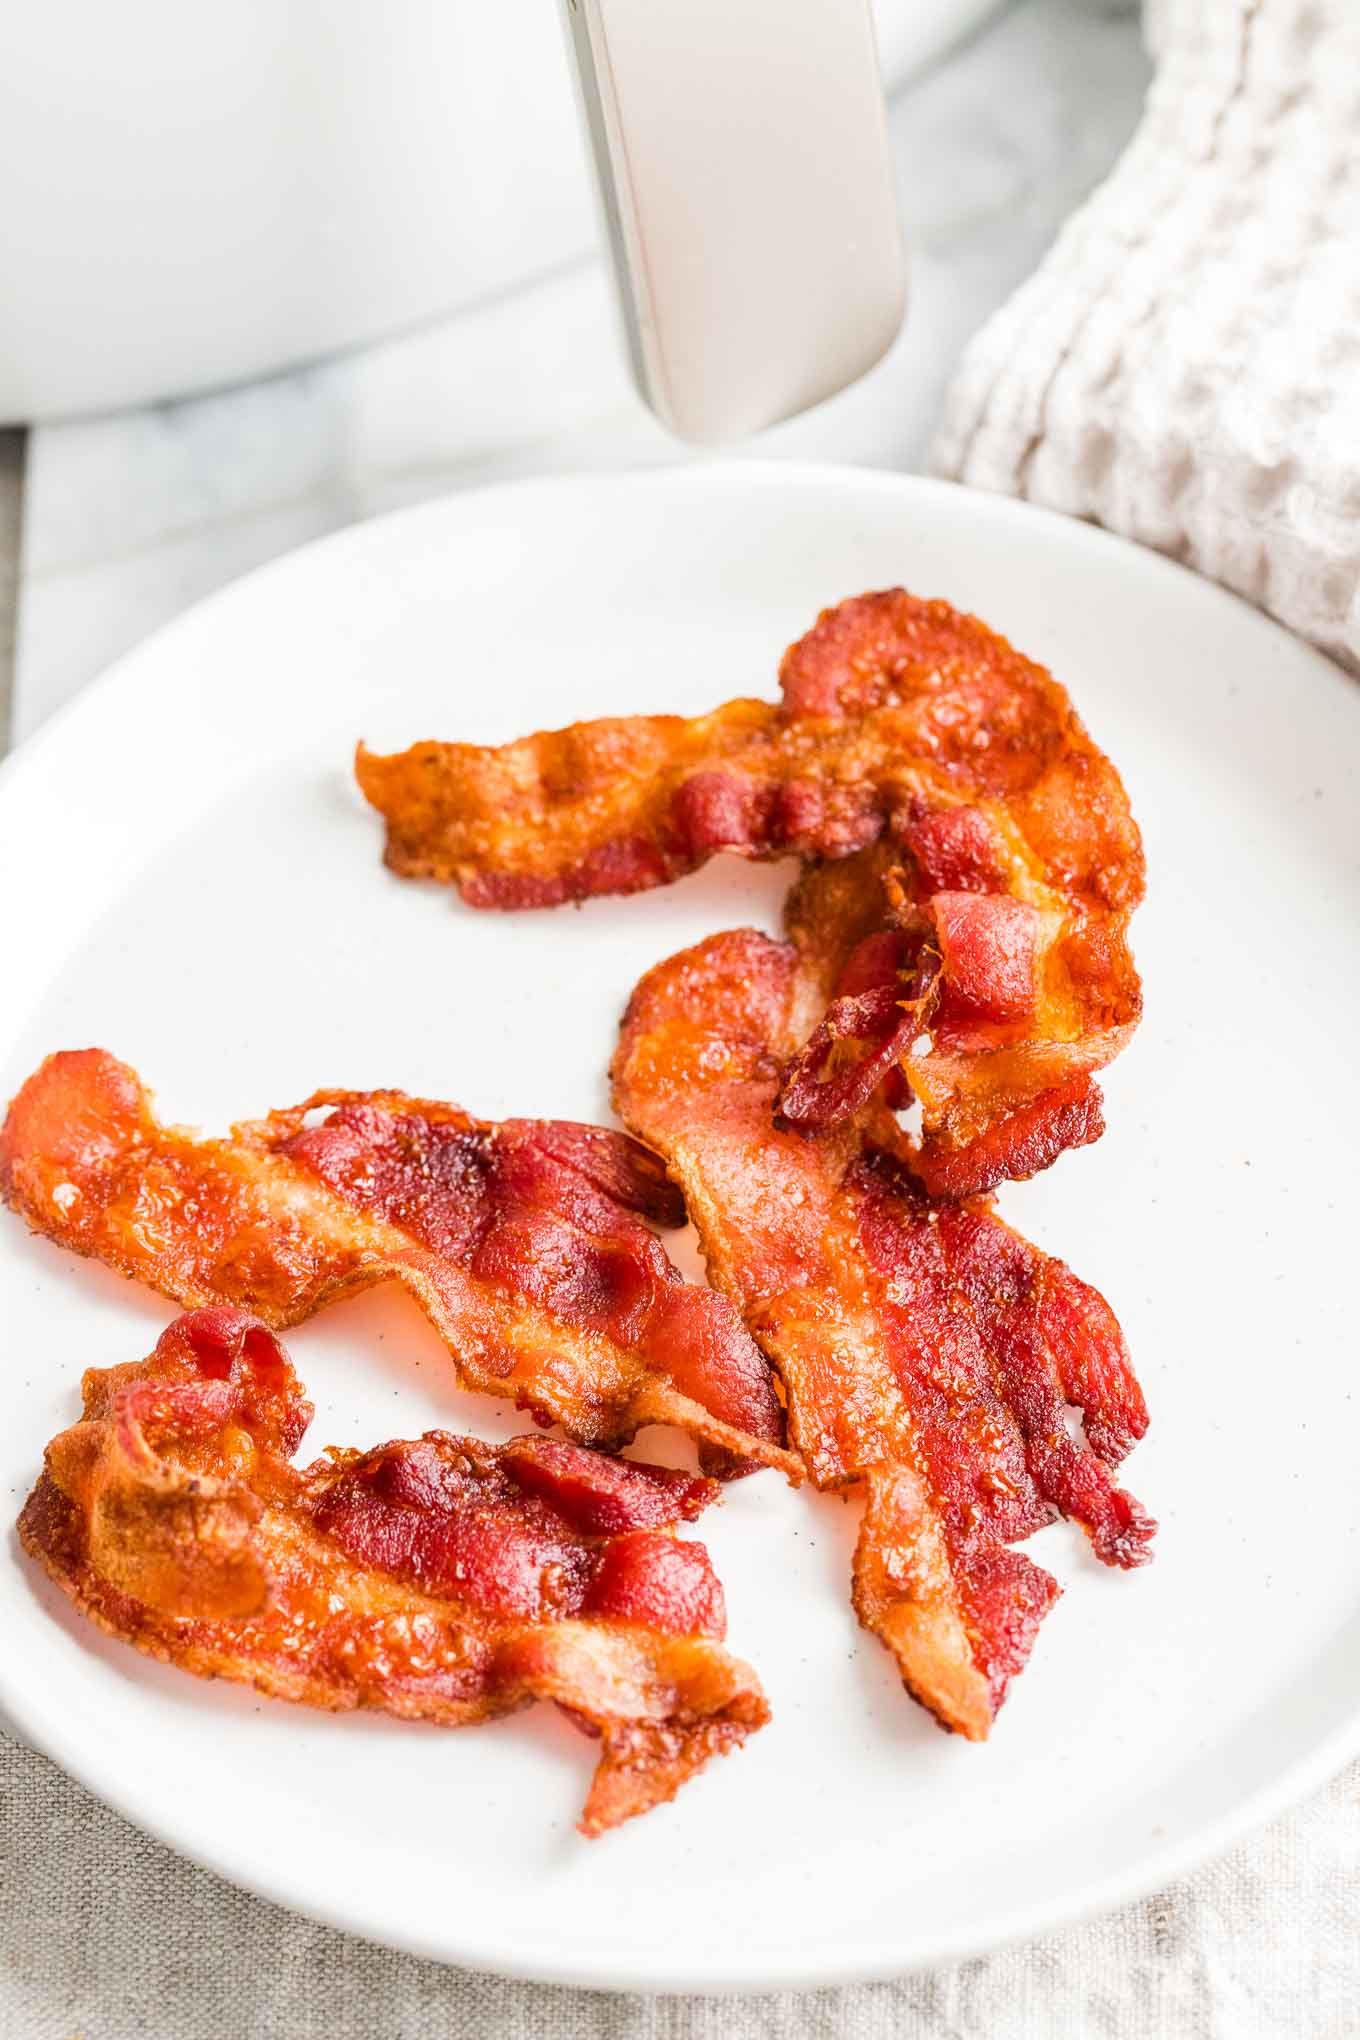 https://platedcravings.com/wp-content/uploads/2020/01/Air-Fryer-Bacon-Plated-Cravings-5.jpg